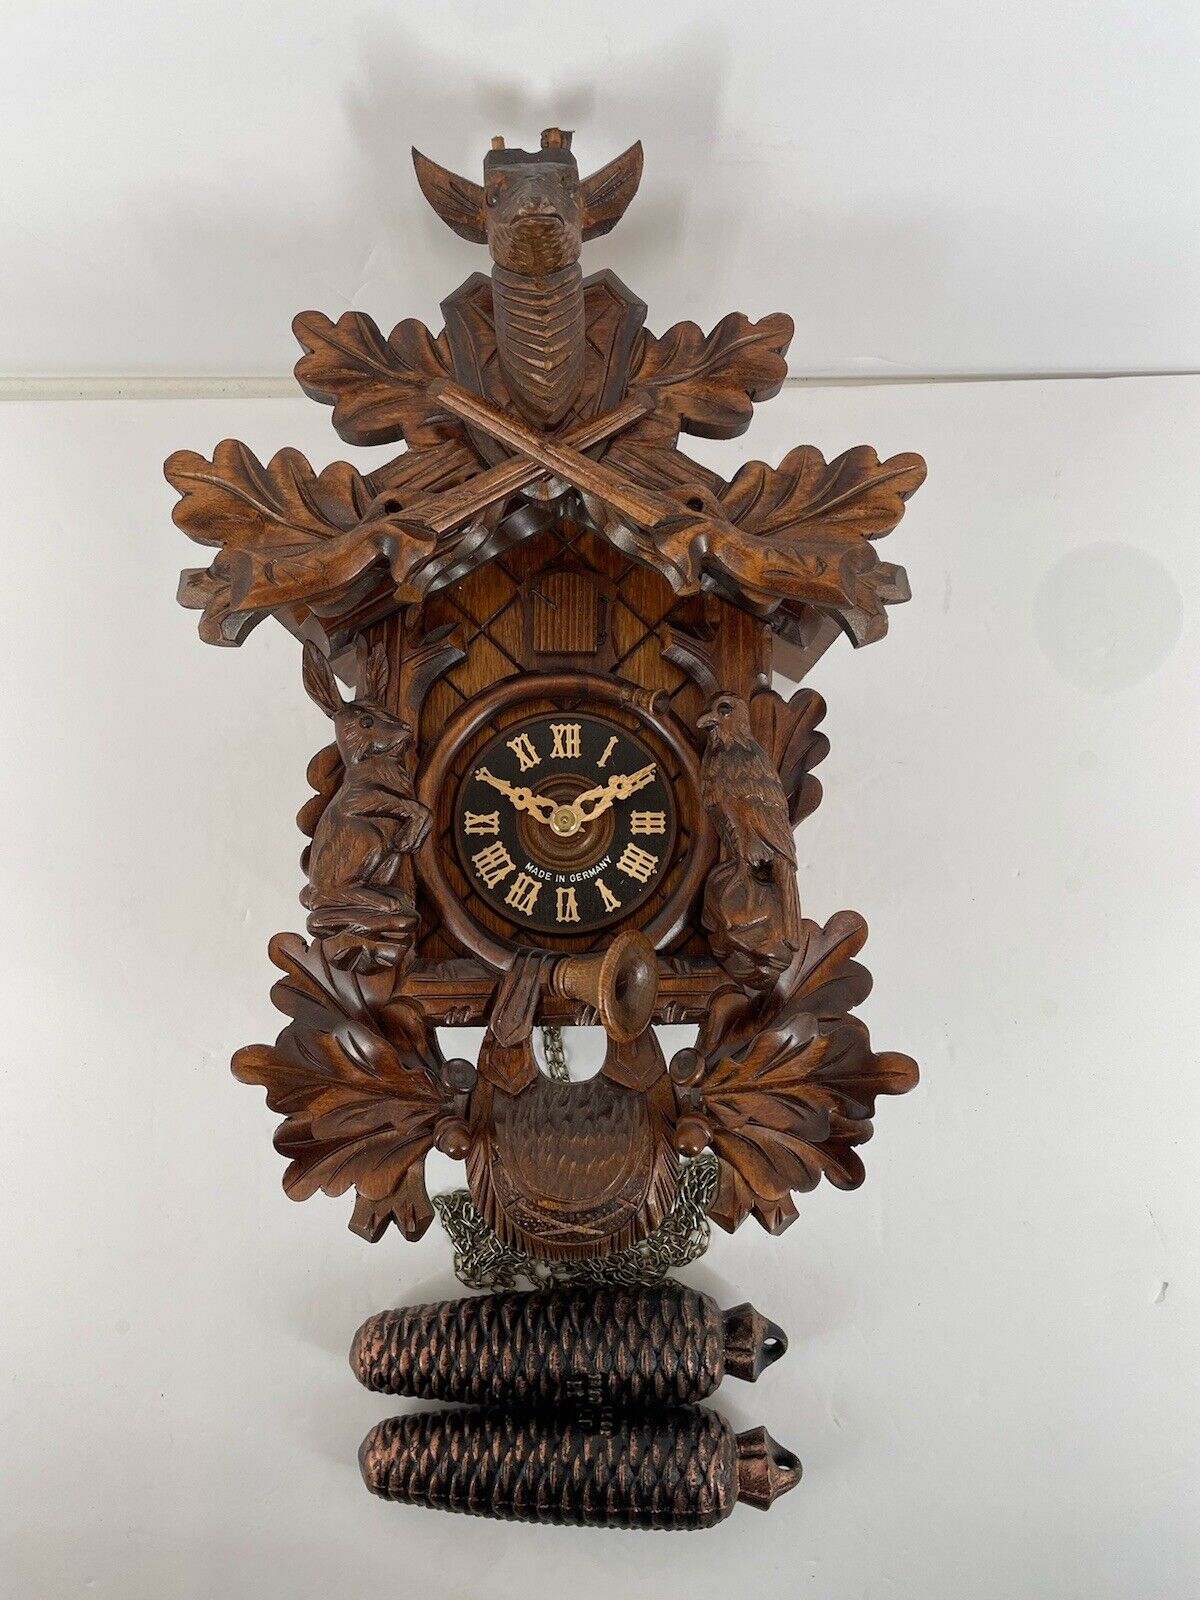 FOR PARTS READ VTG German Black Forest Hunter Cuckoo Clock. INCOMPLETE UNTESTED